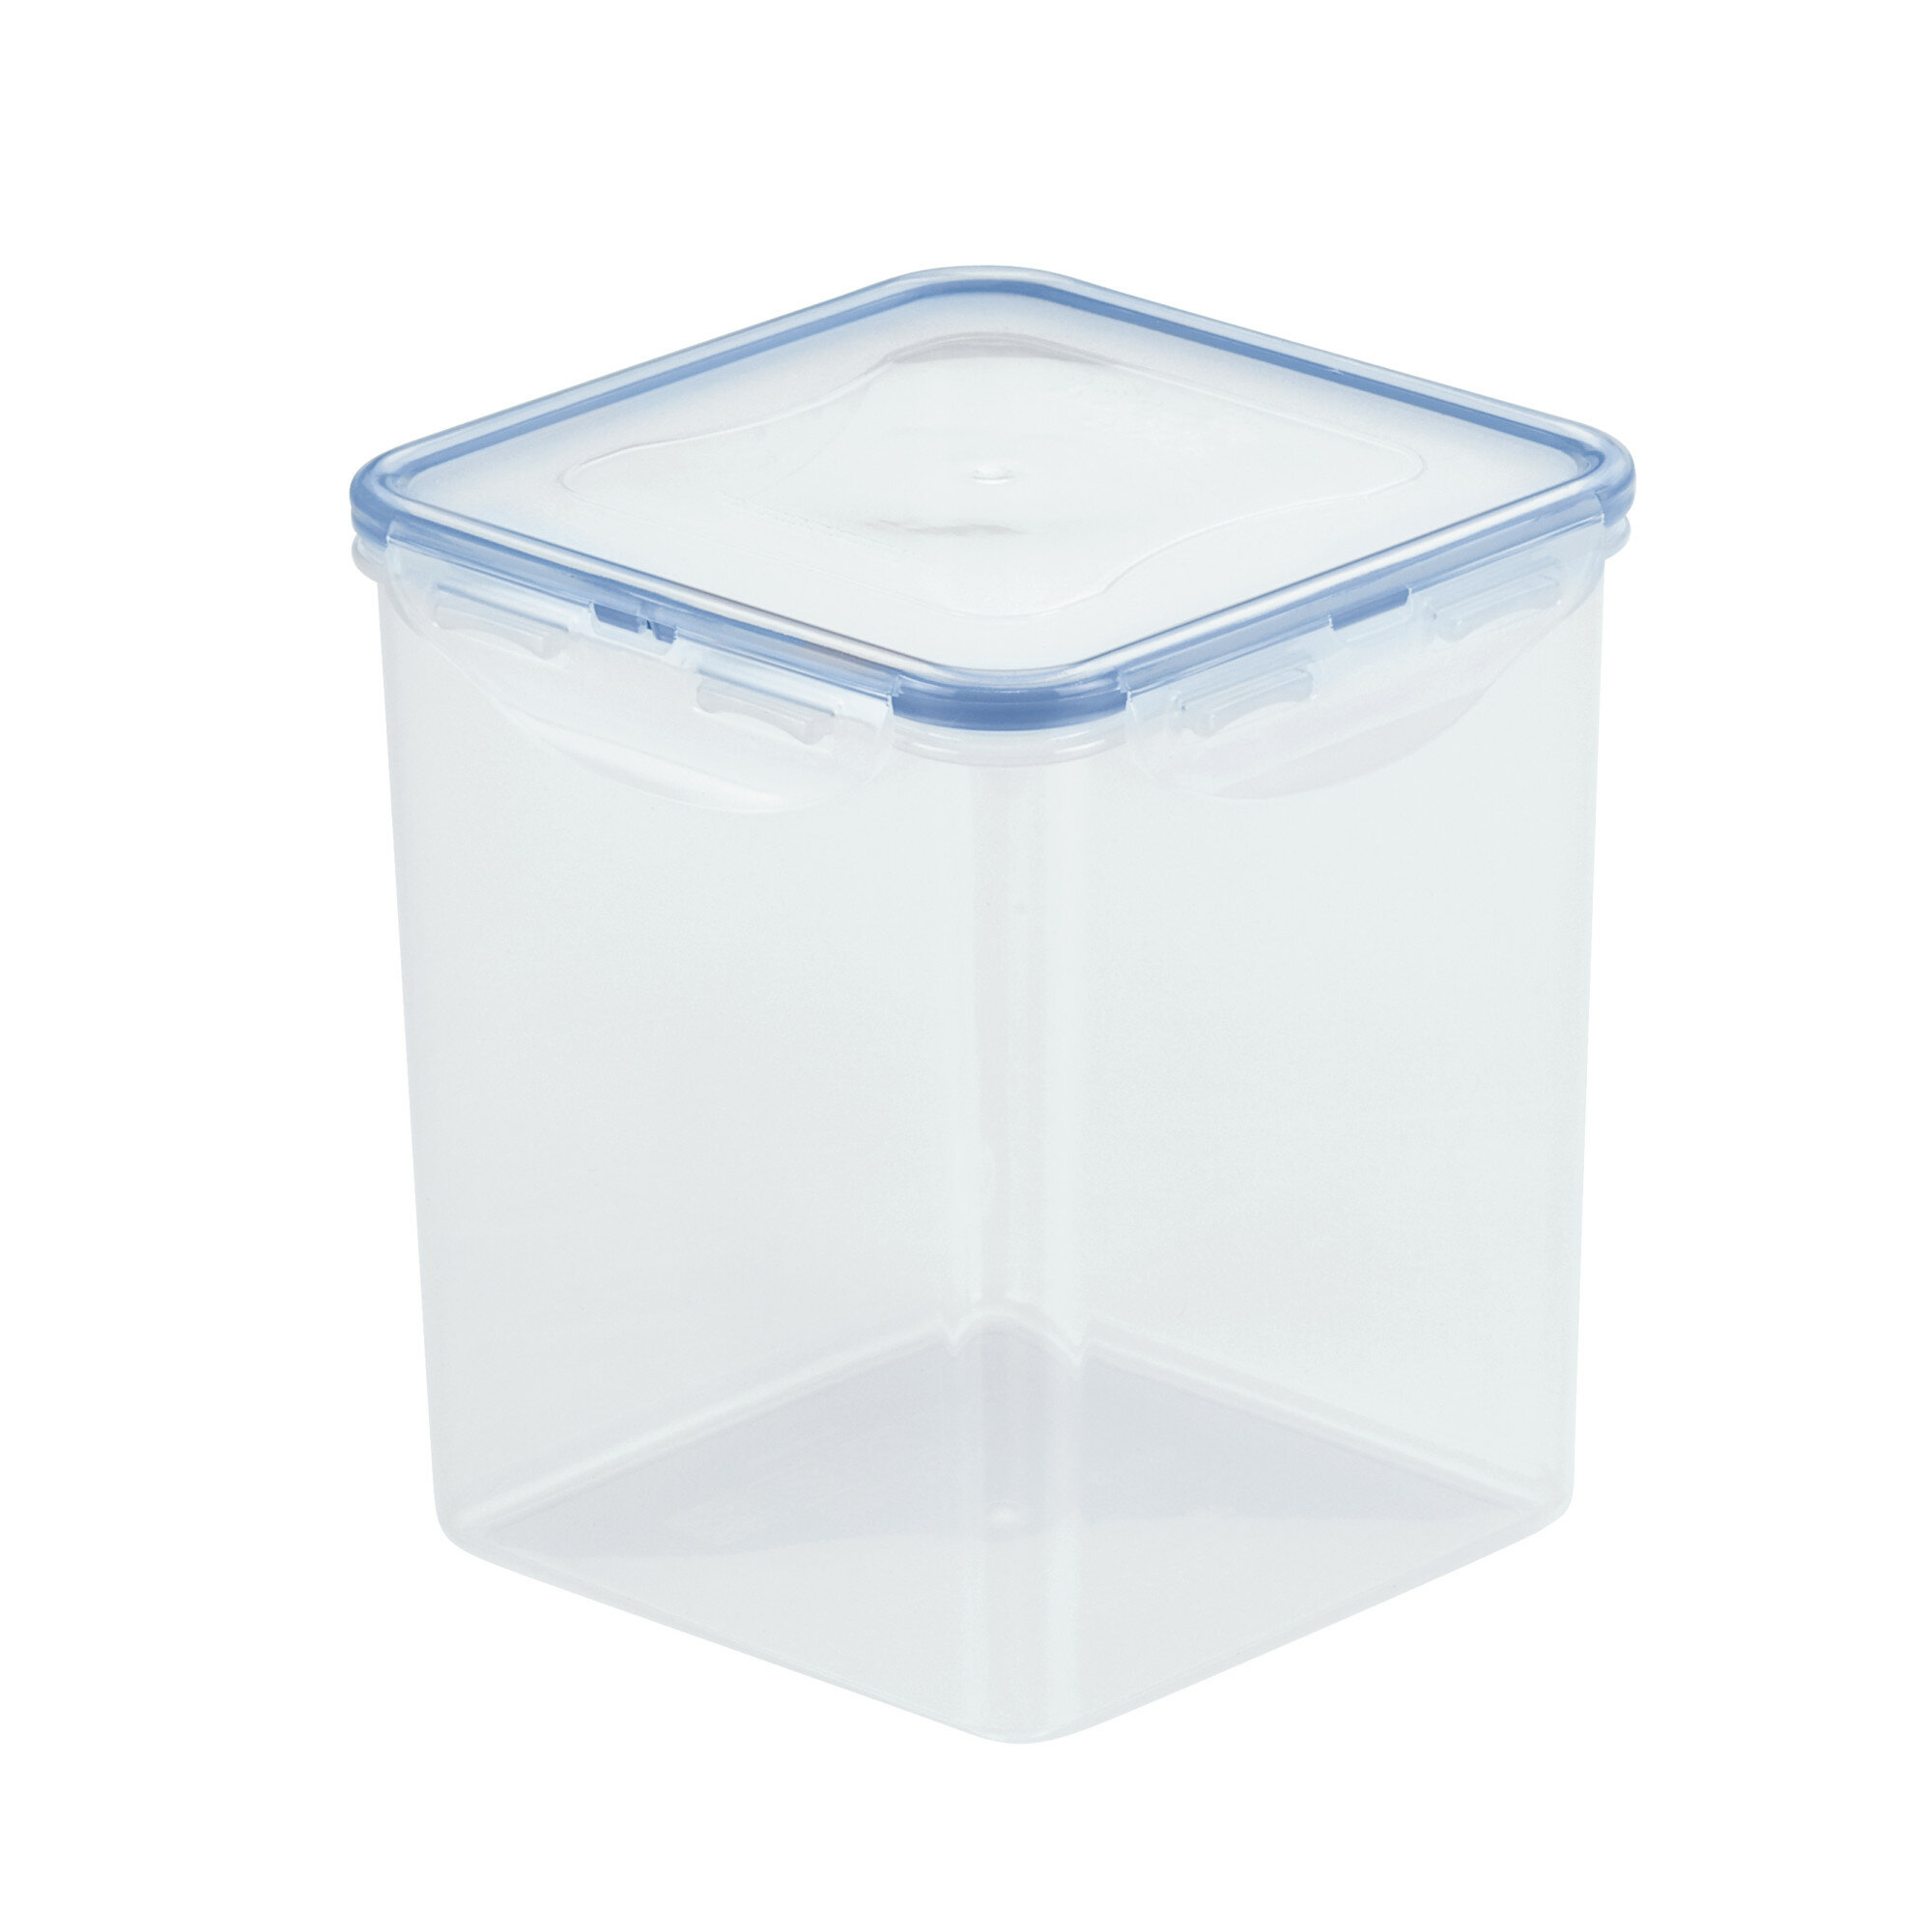 LocknLock Easy Essentials Pantry Square Food Storage Container, 16